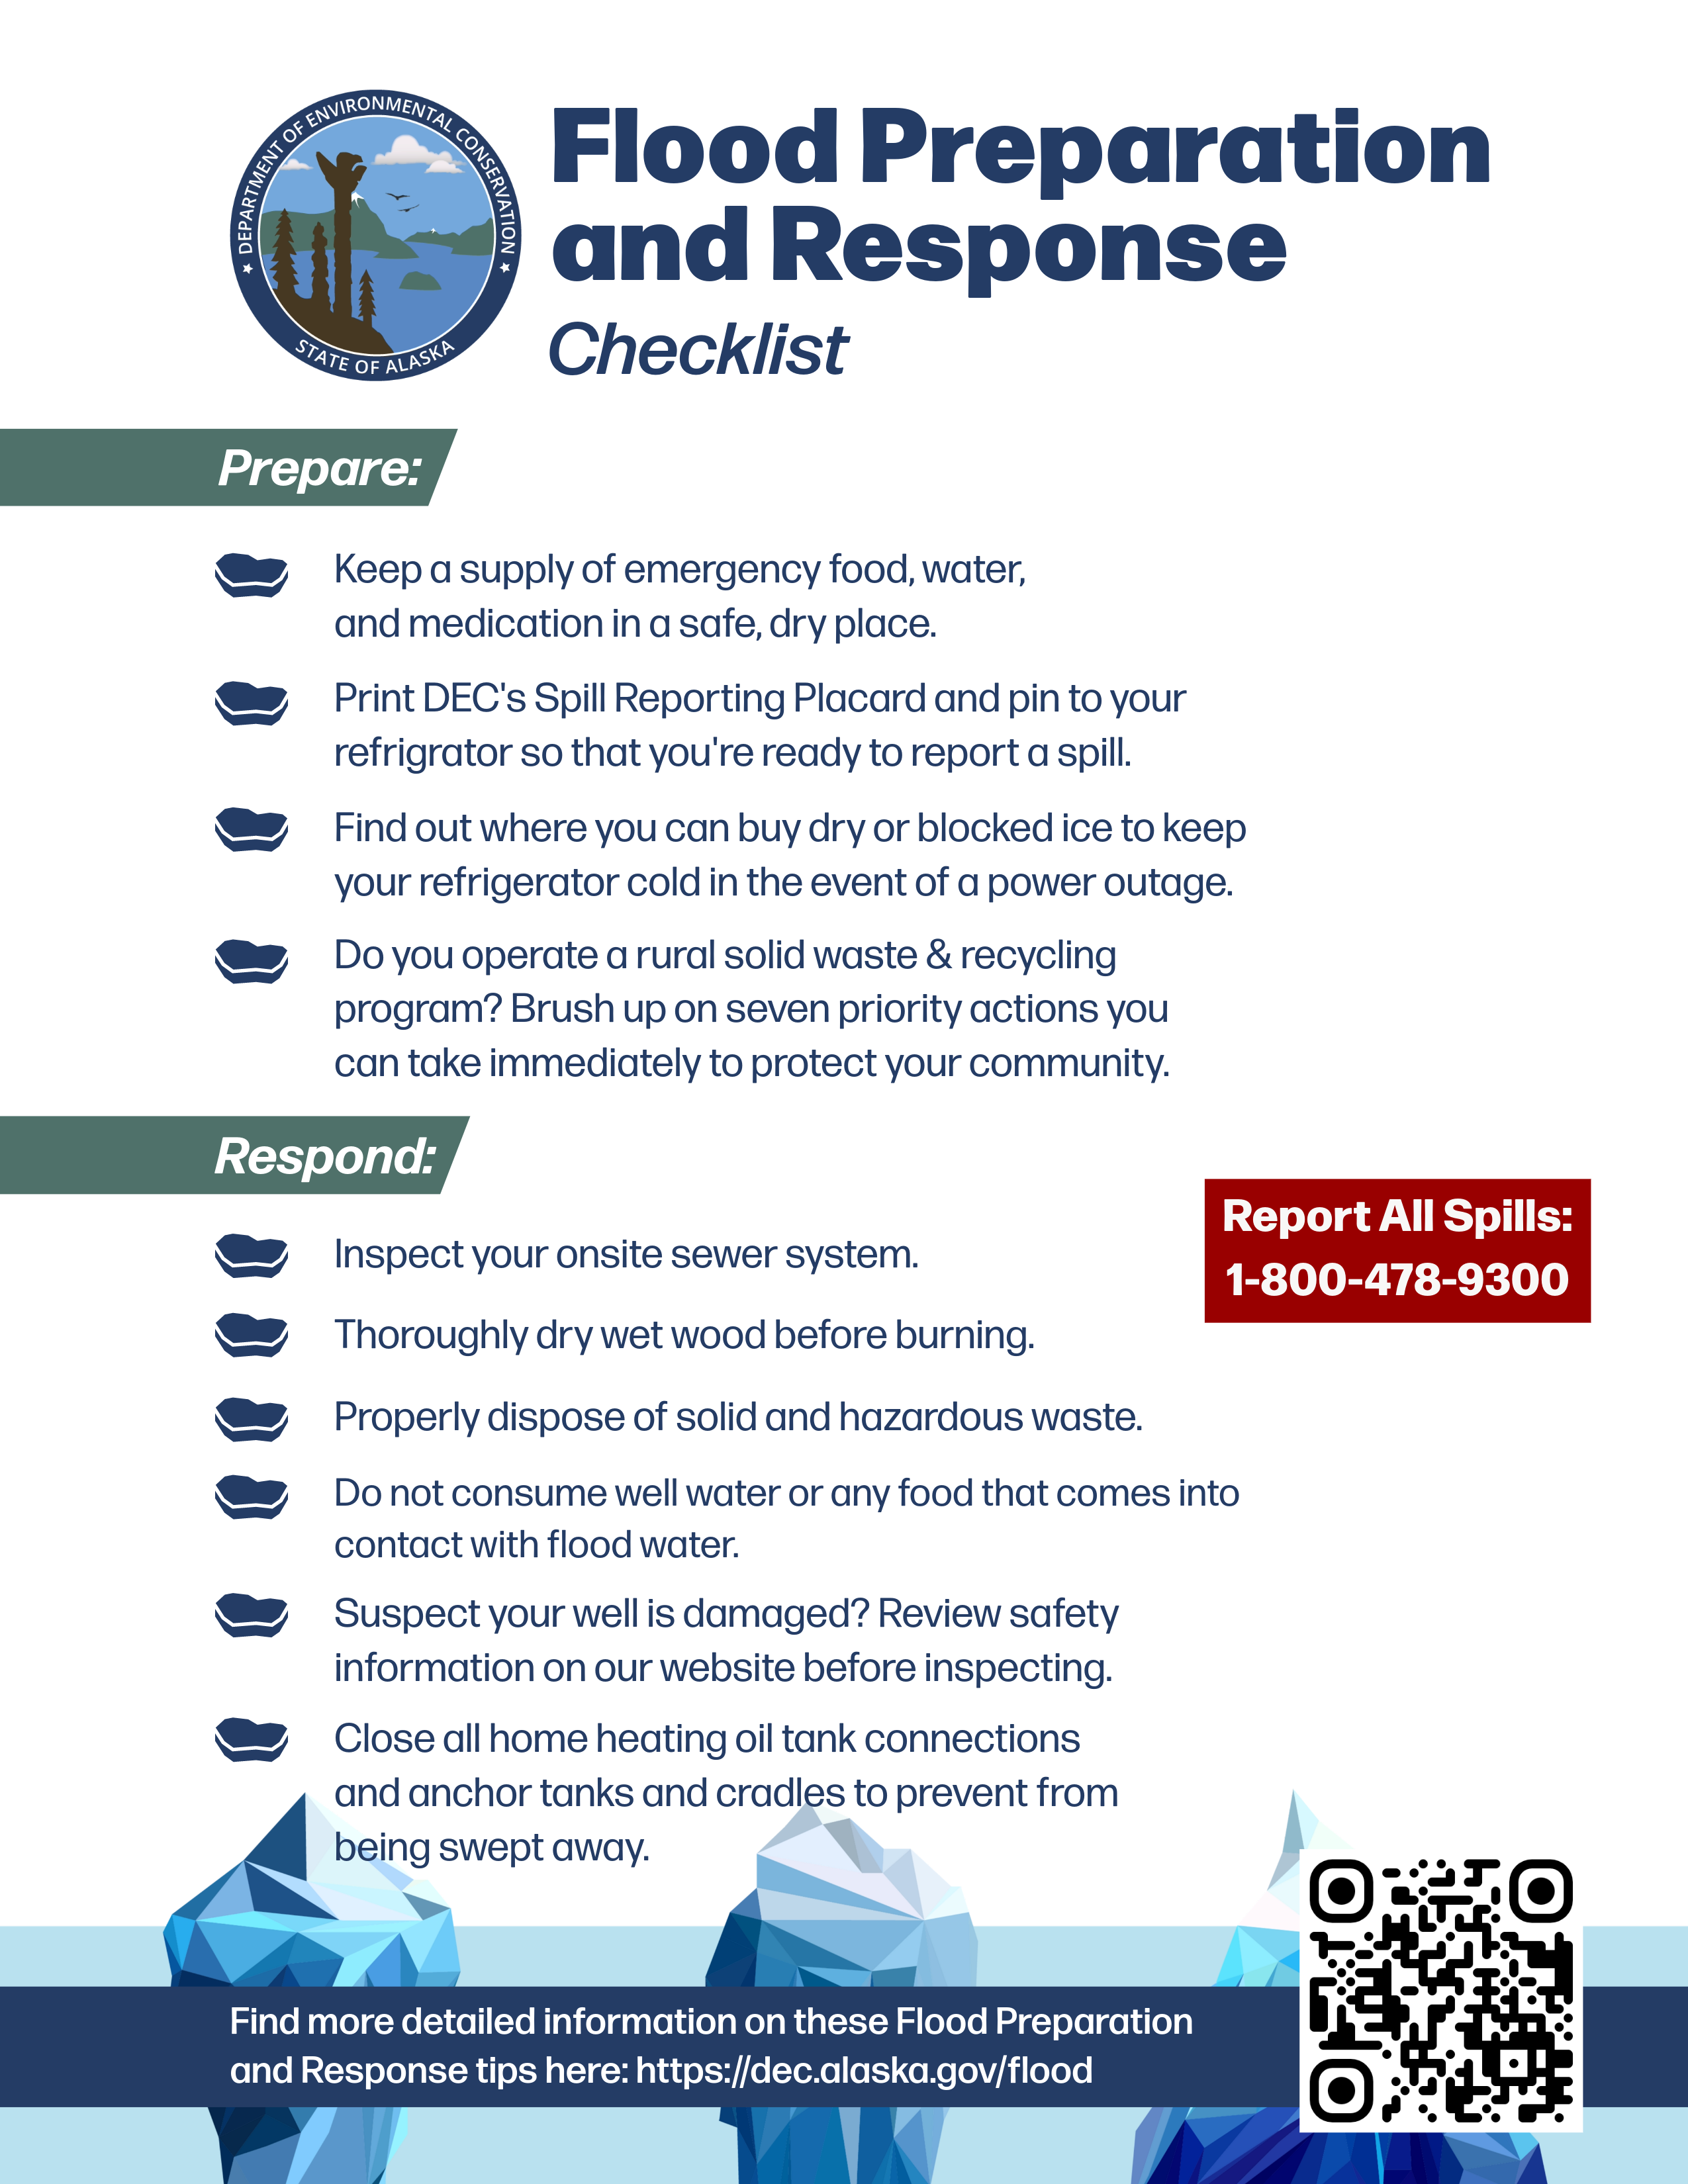 Flood Prevention and Response Checklist